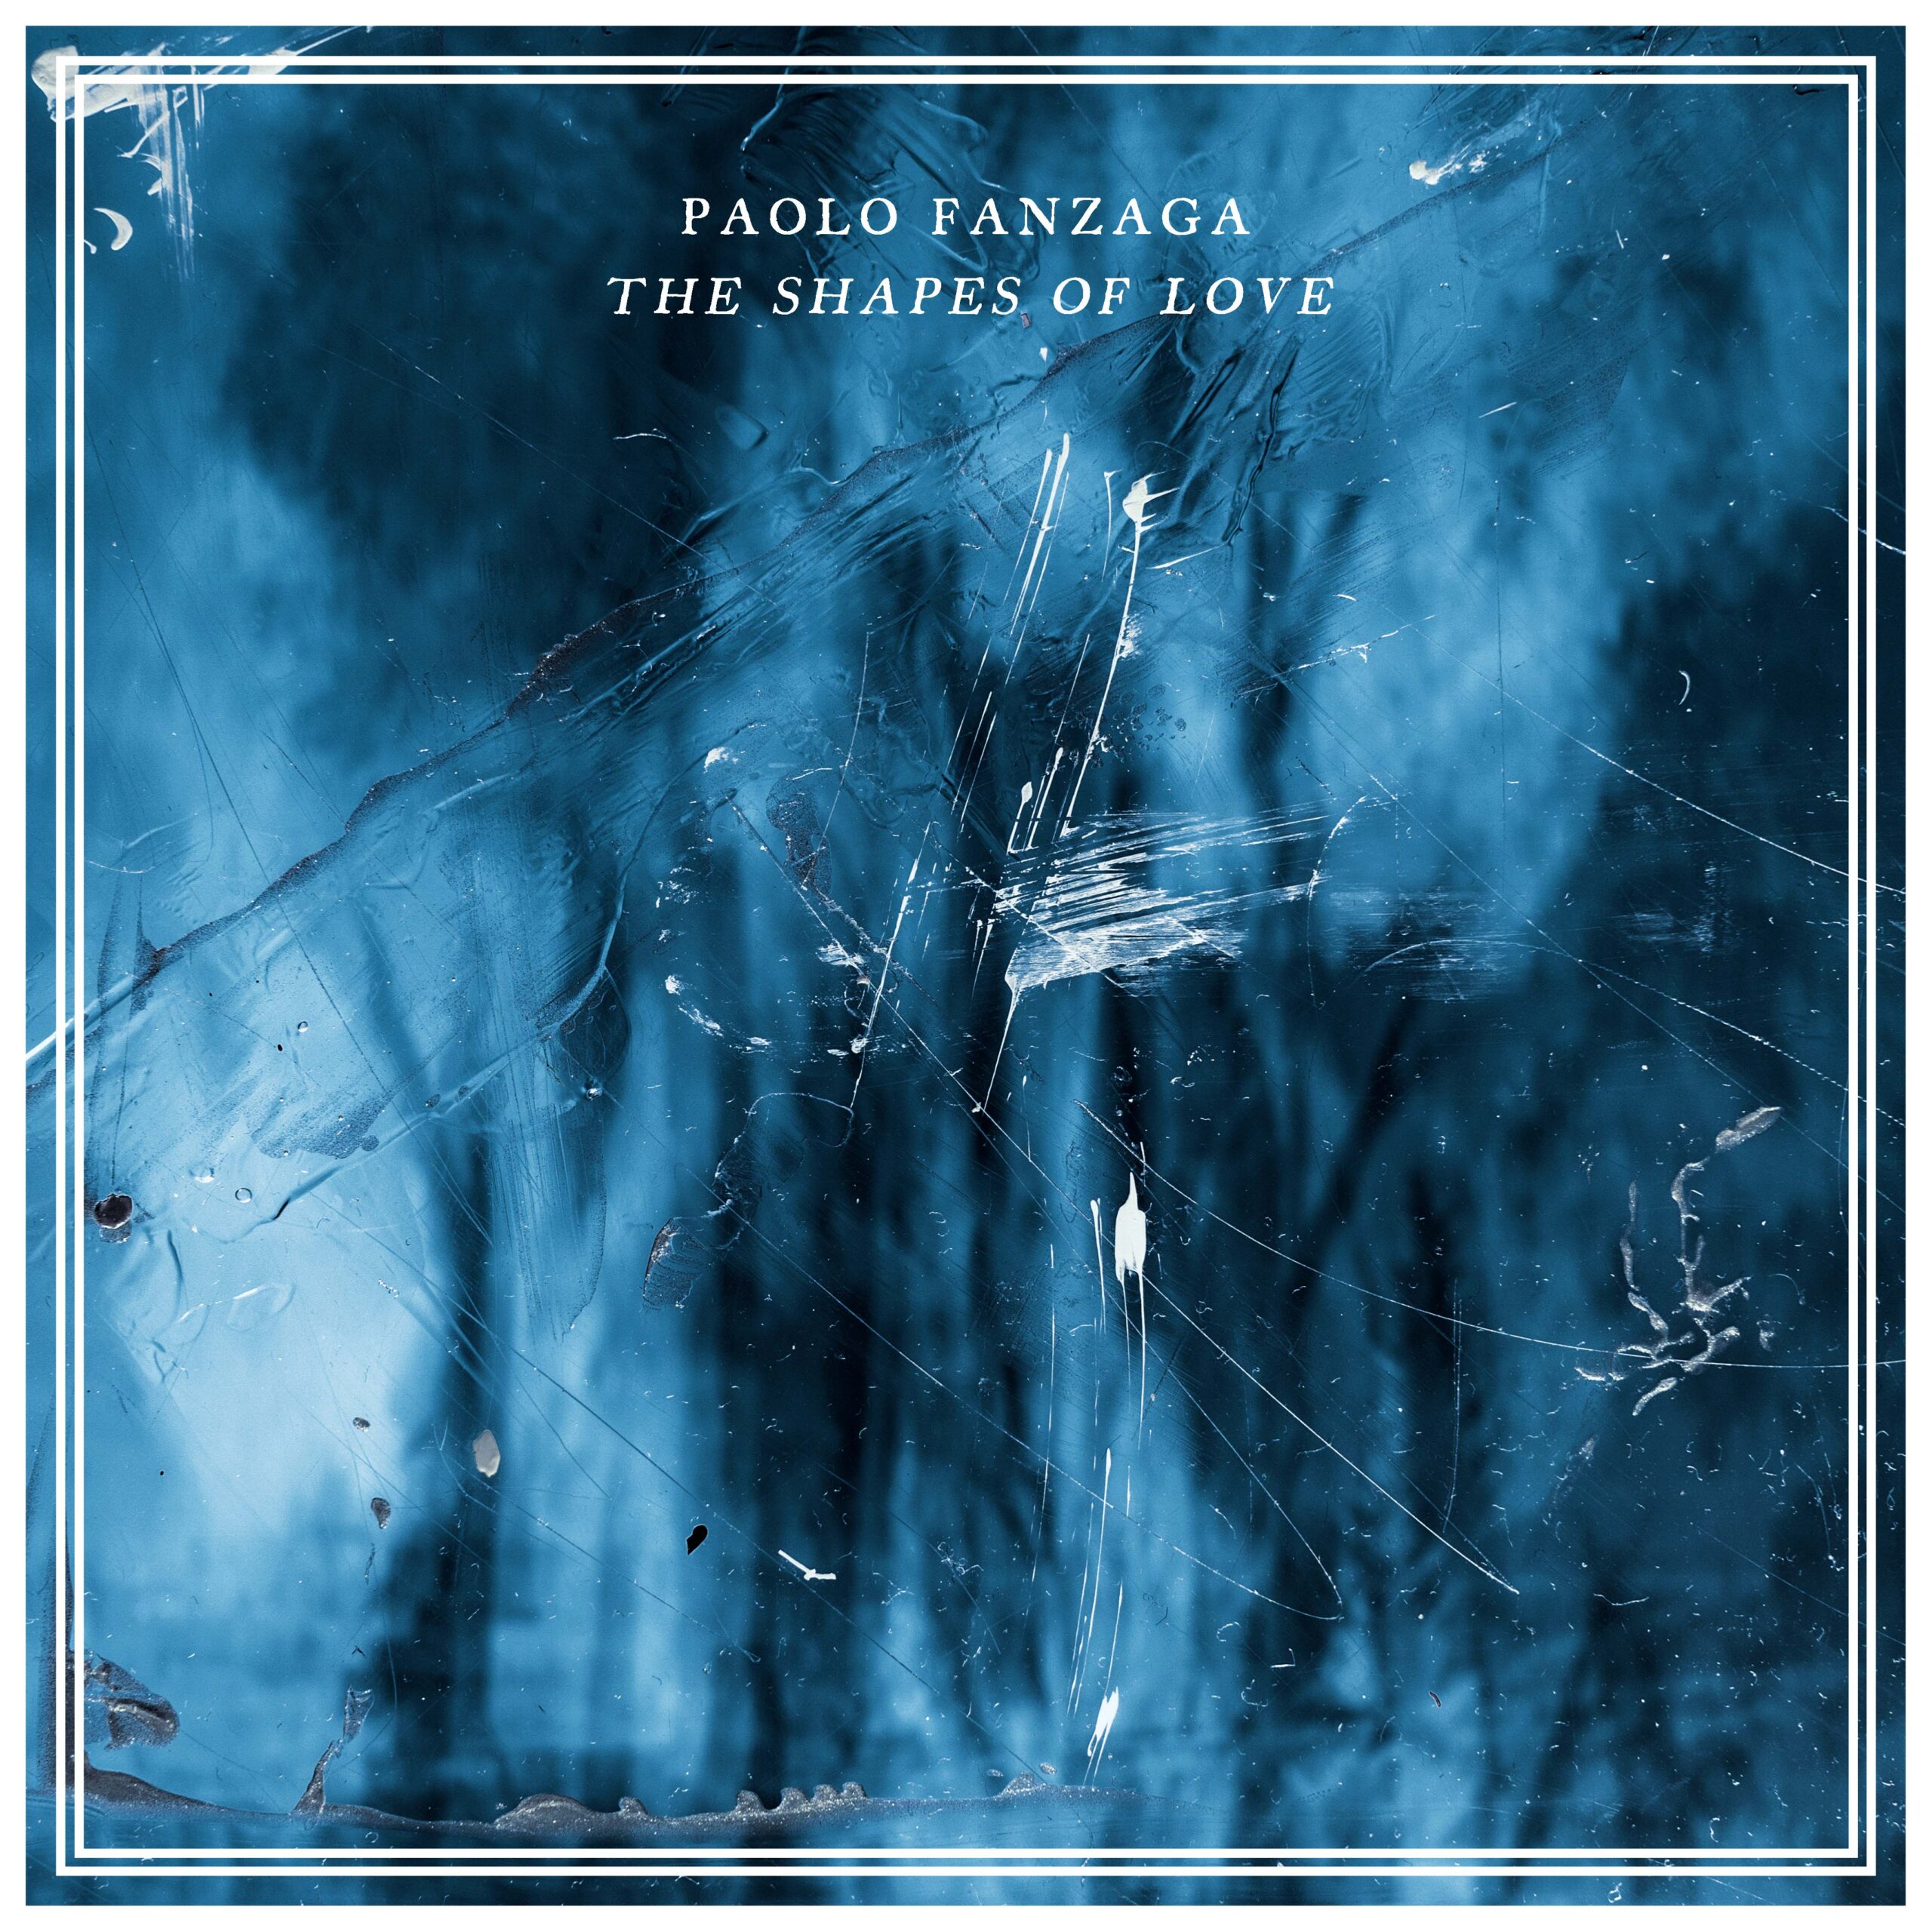 Paolo Fanzaga – “The Shapes of Love”